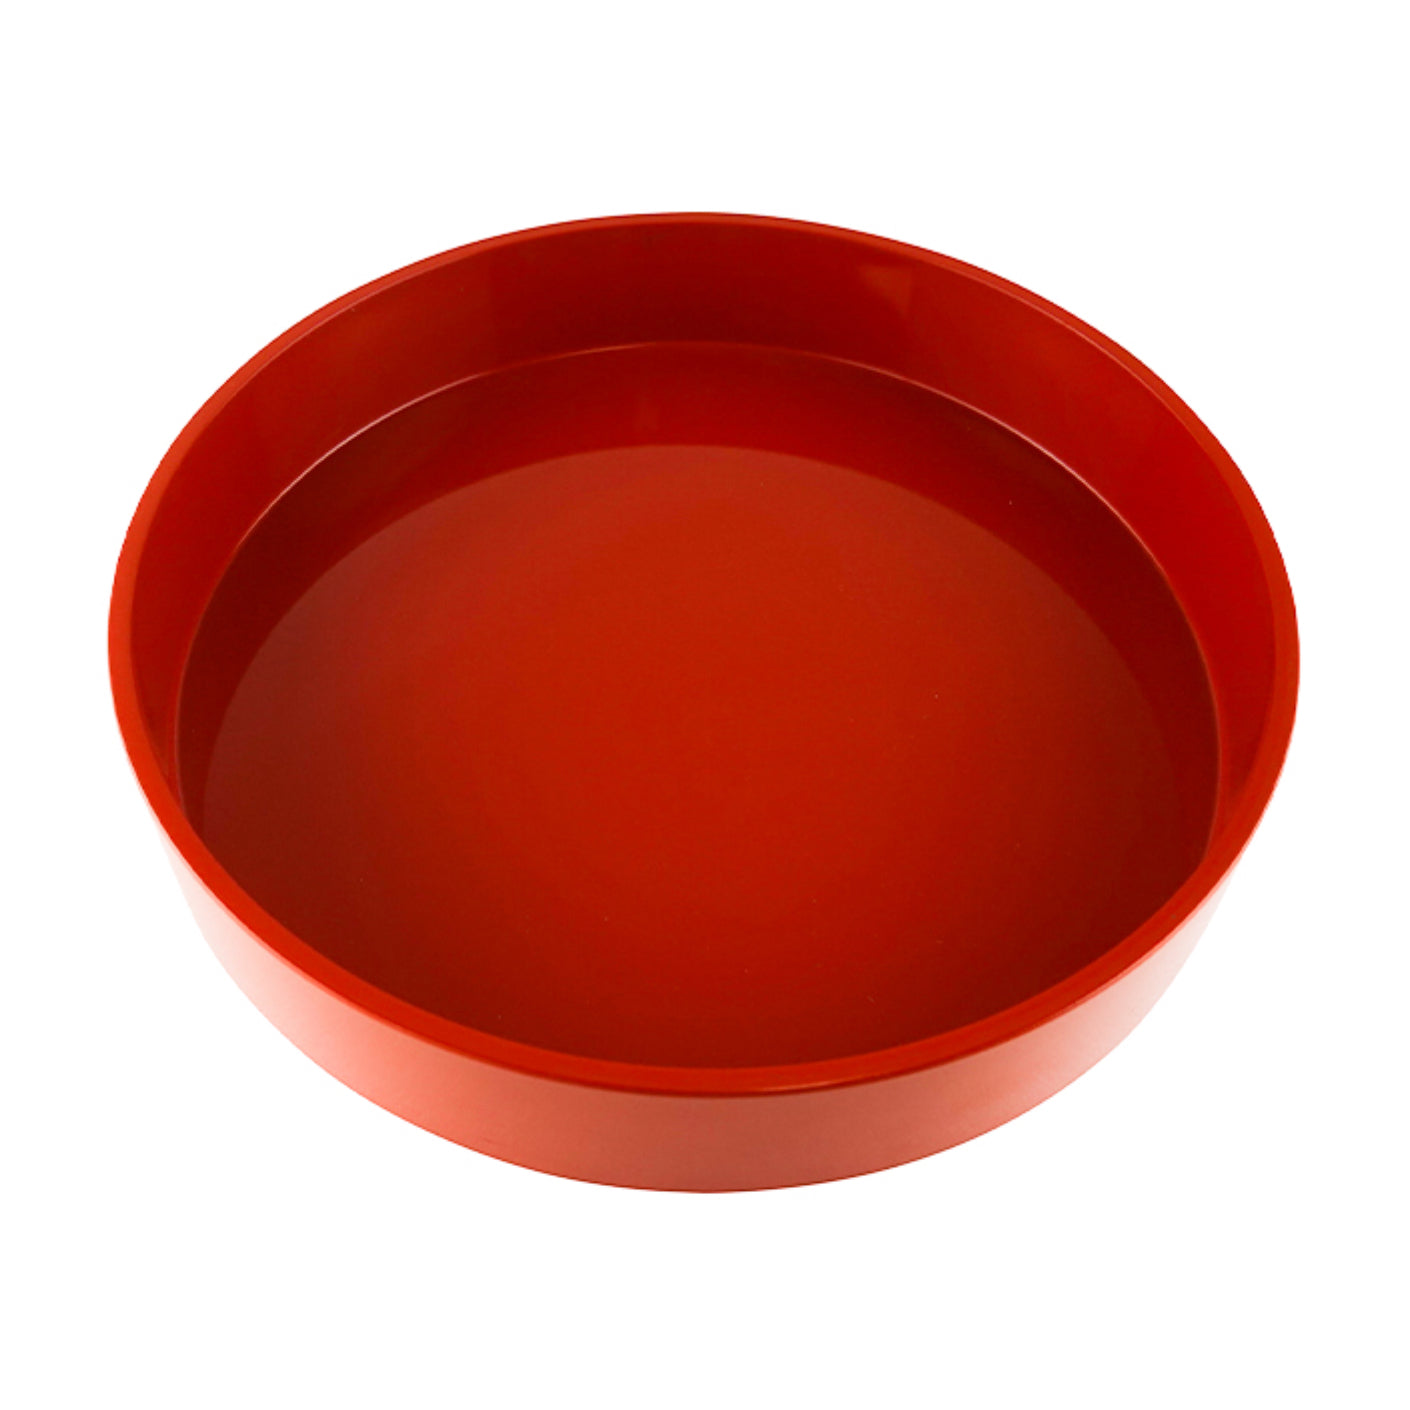 Basic round basin (plastic) red